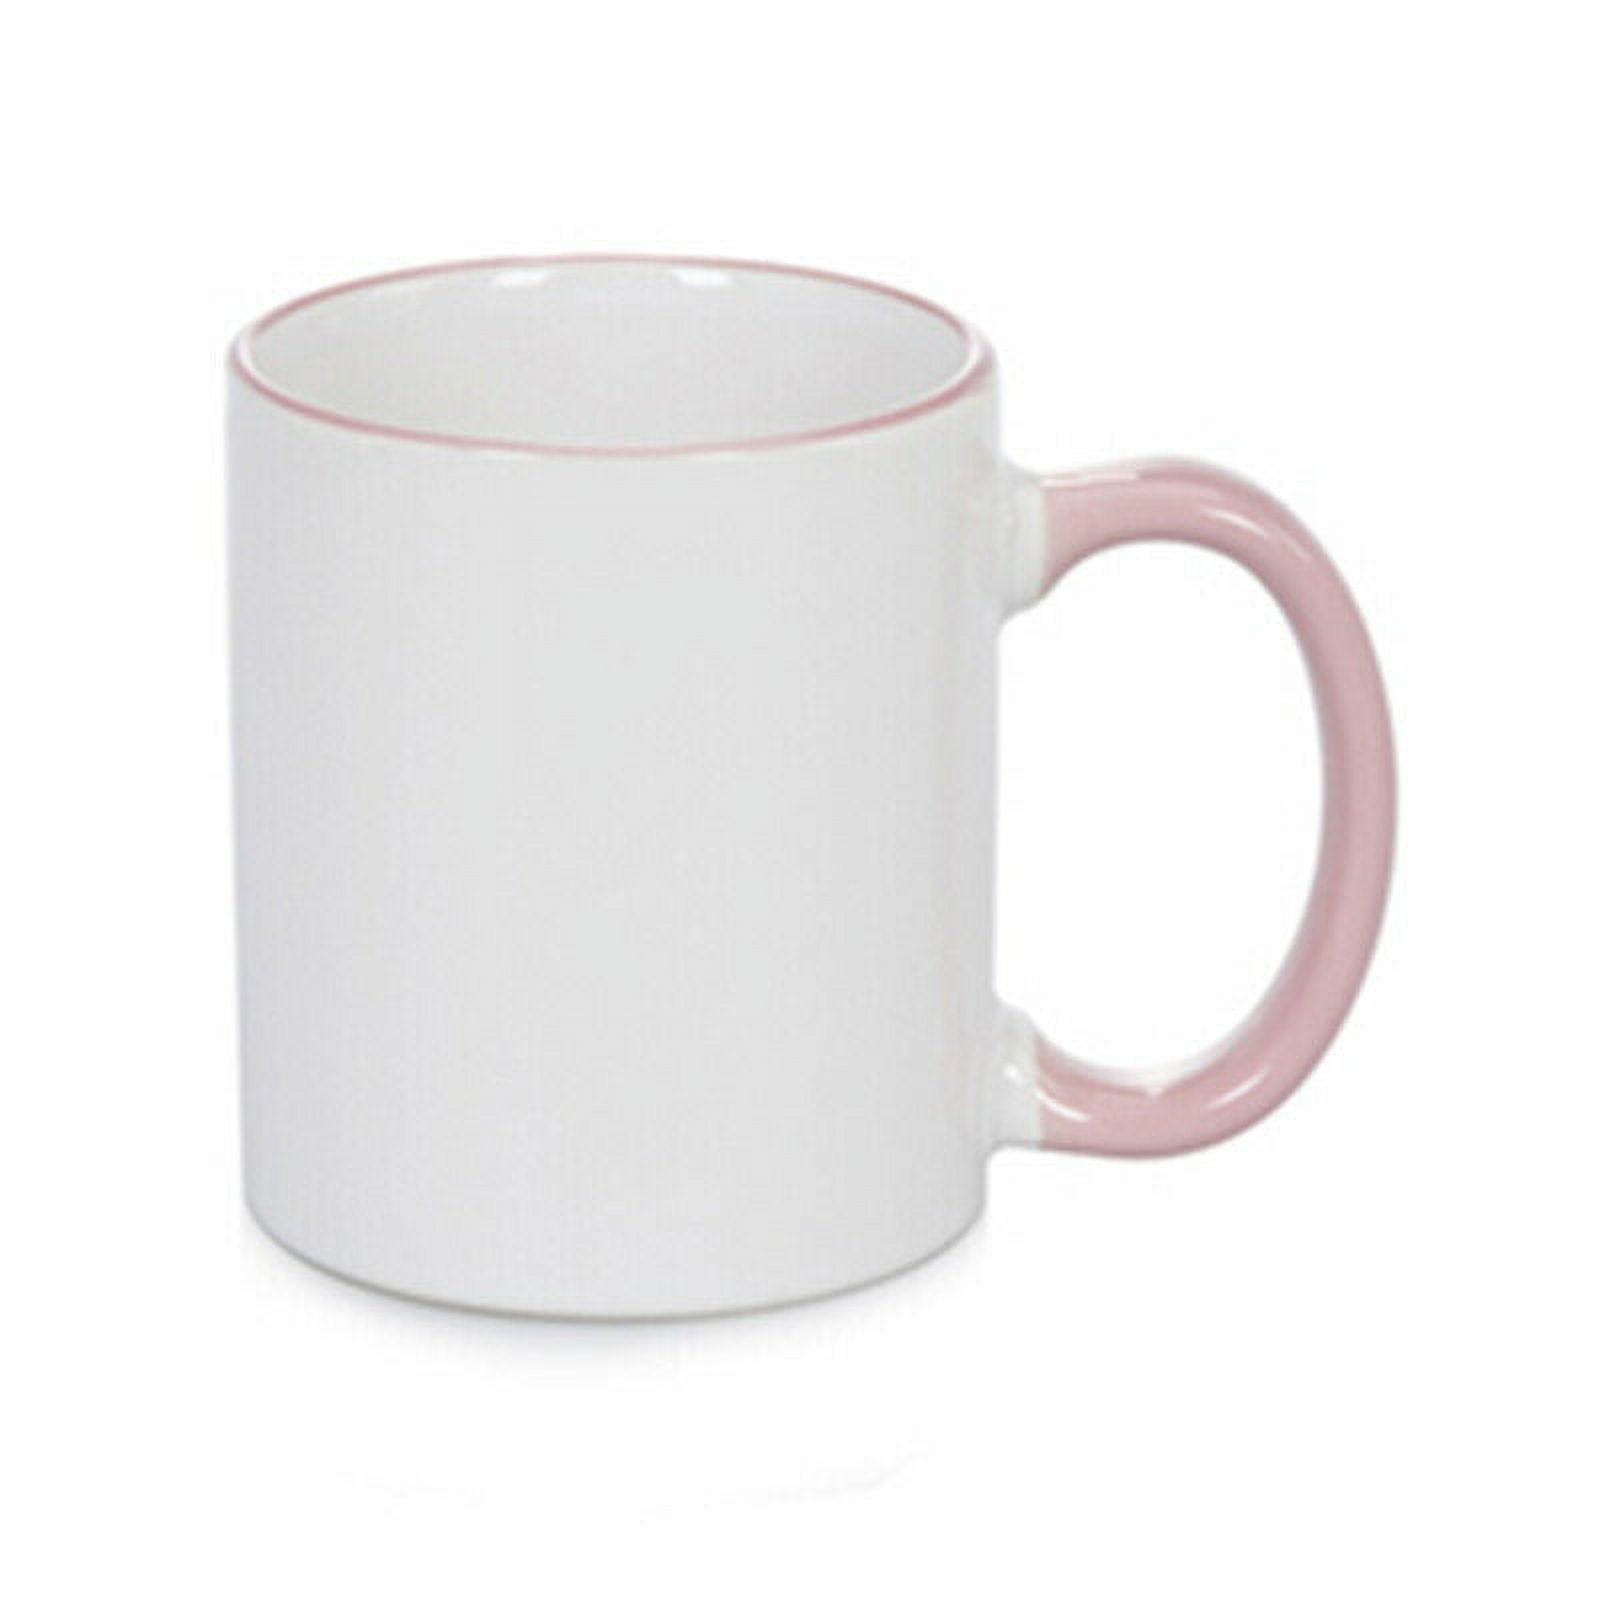 Matte Fluorescent Pink Ceramic Sublimation Coffee Mug - 11oz.